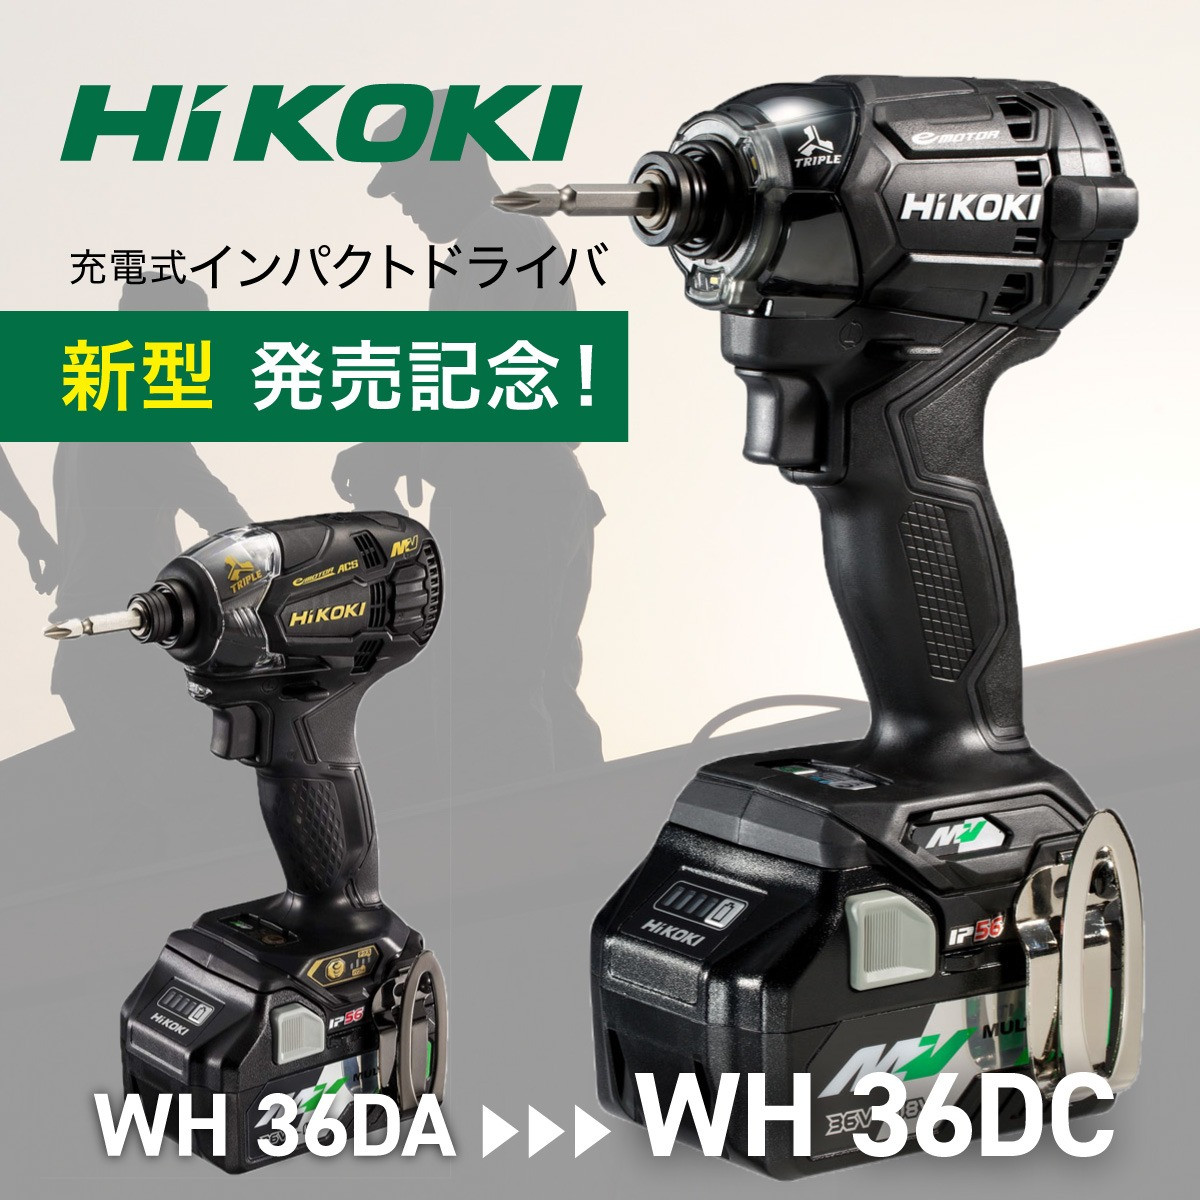 HiKOKI ハイコーキ インパクトドライバ新型発売記念で旧型モデルが安い！